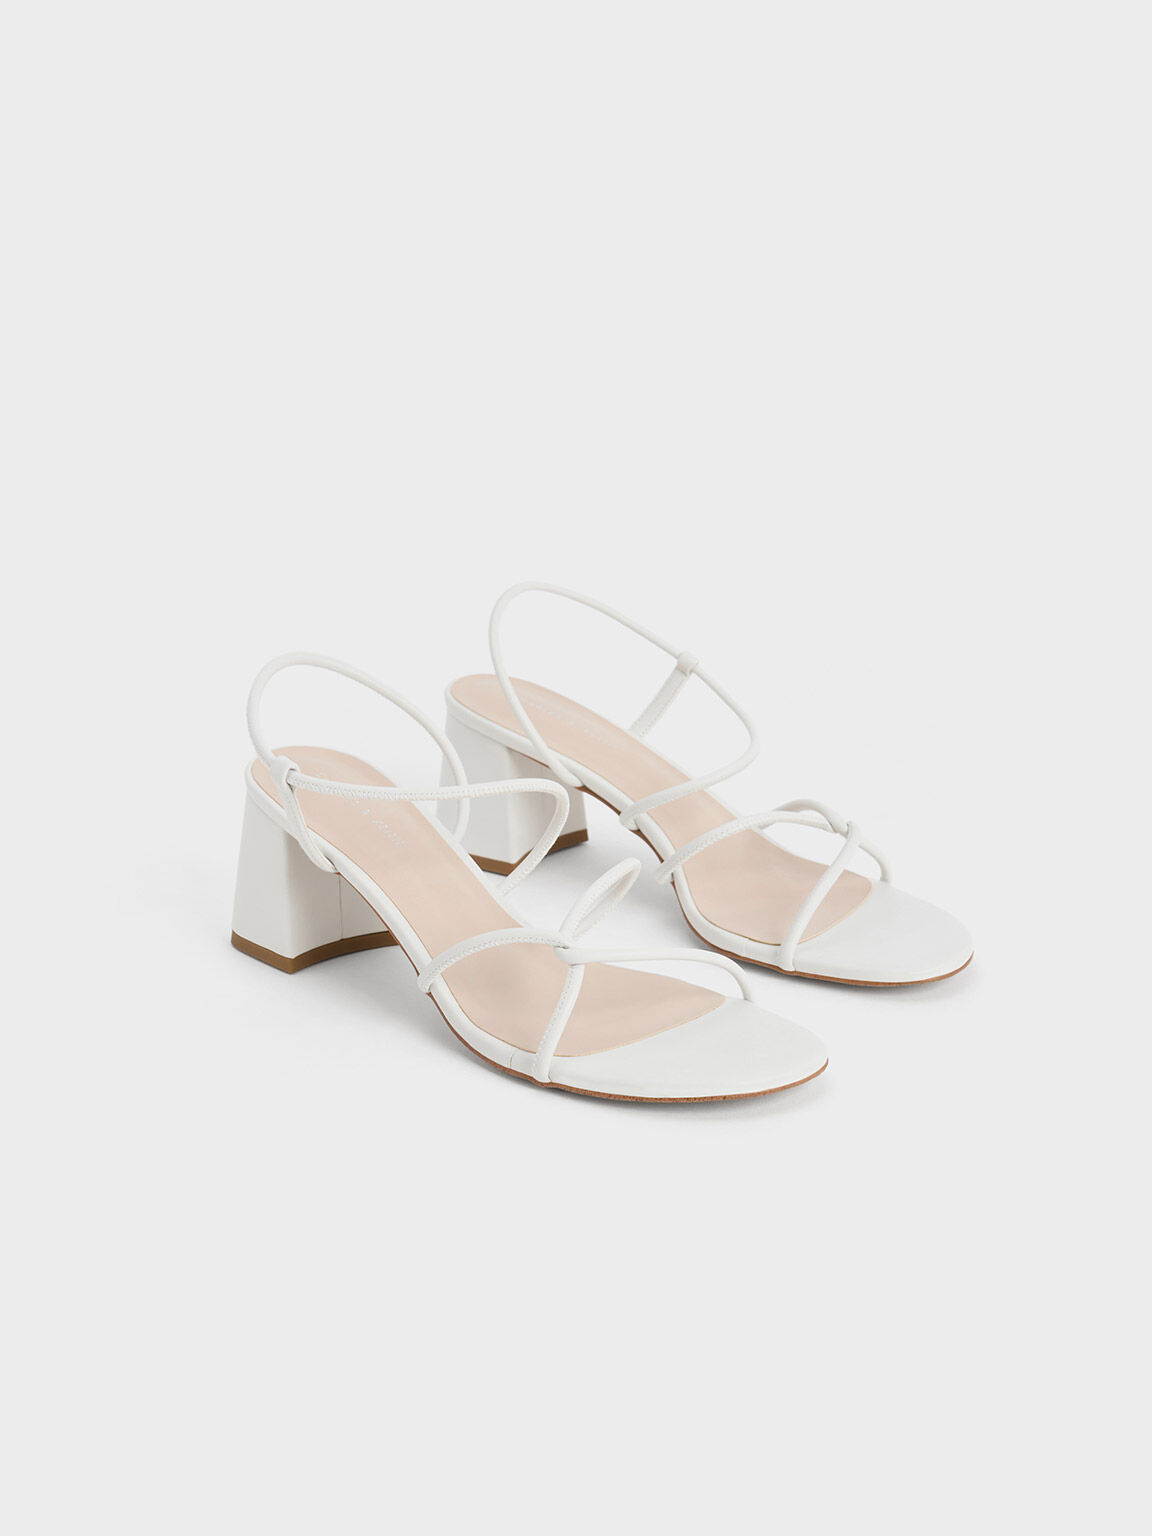 Monara White Satin Lace-Up High Heel Sandals | Lace up high heels, White  strappy heels, High heels for prom